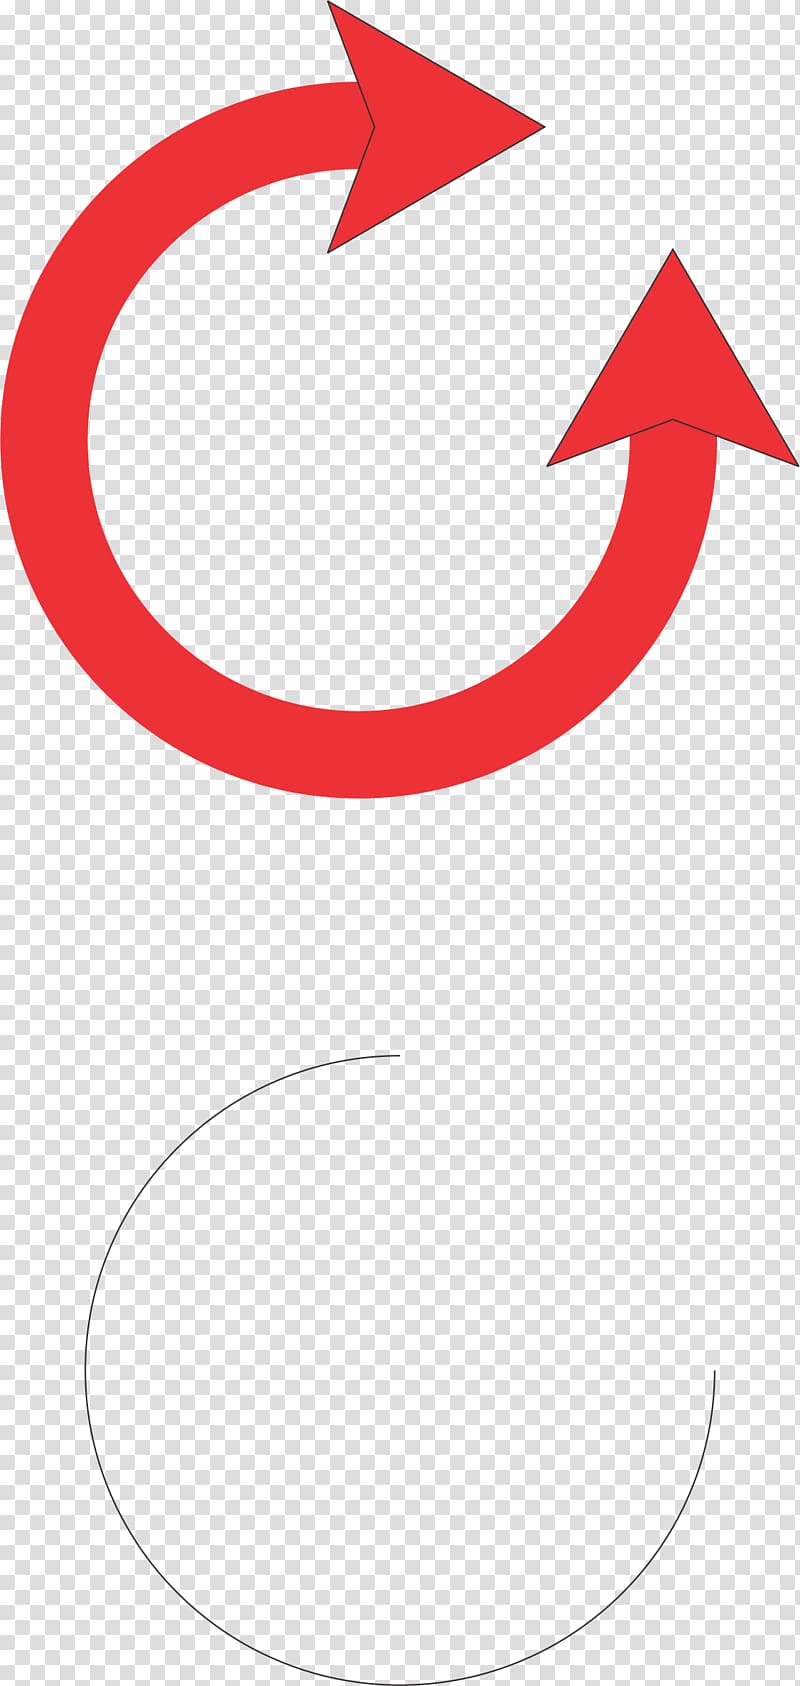 CorelDRAW Arrow Diagram, red curve transparent background PNG clipart